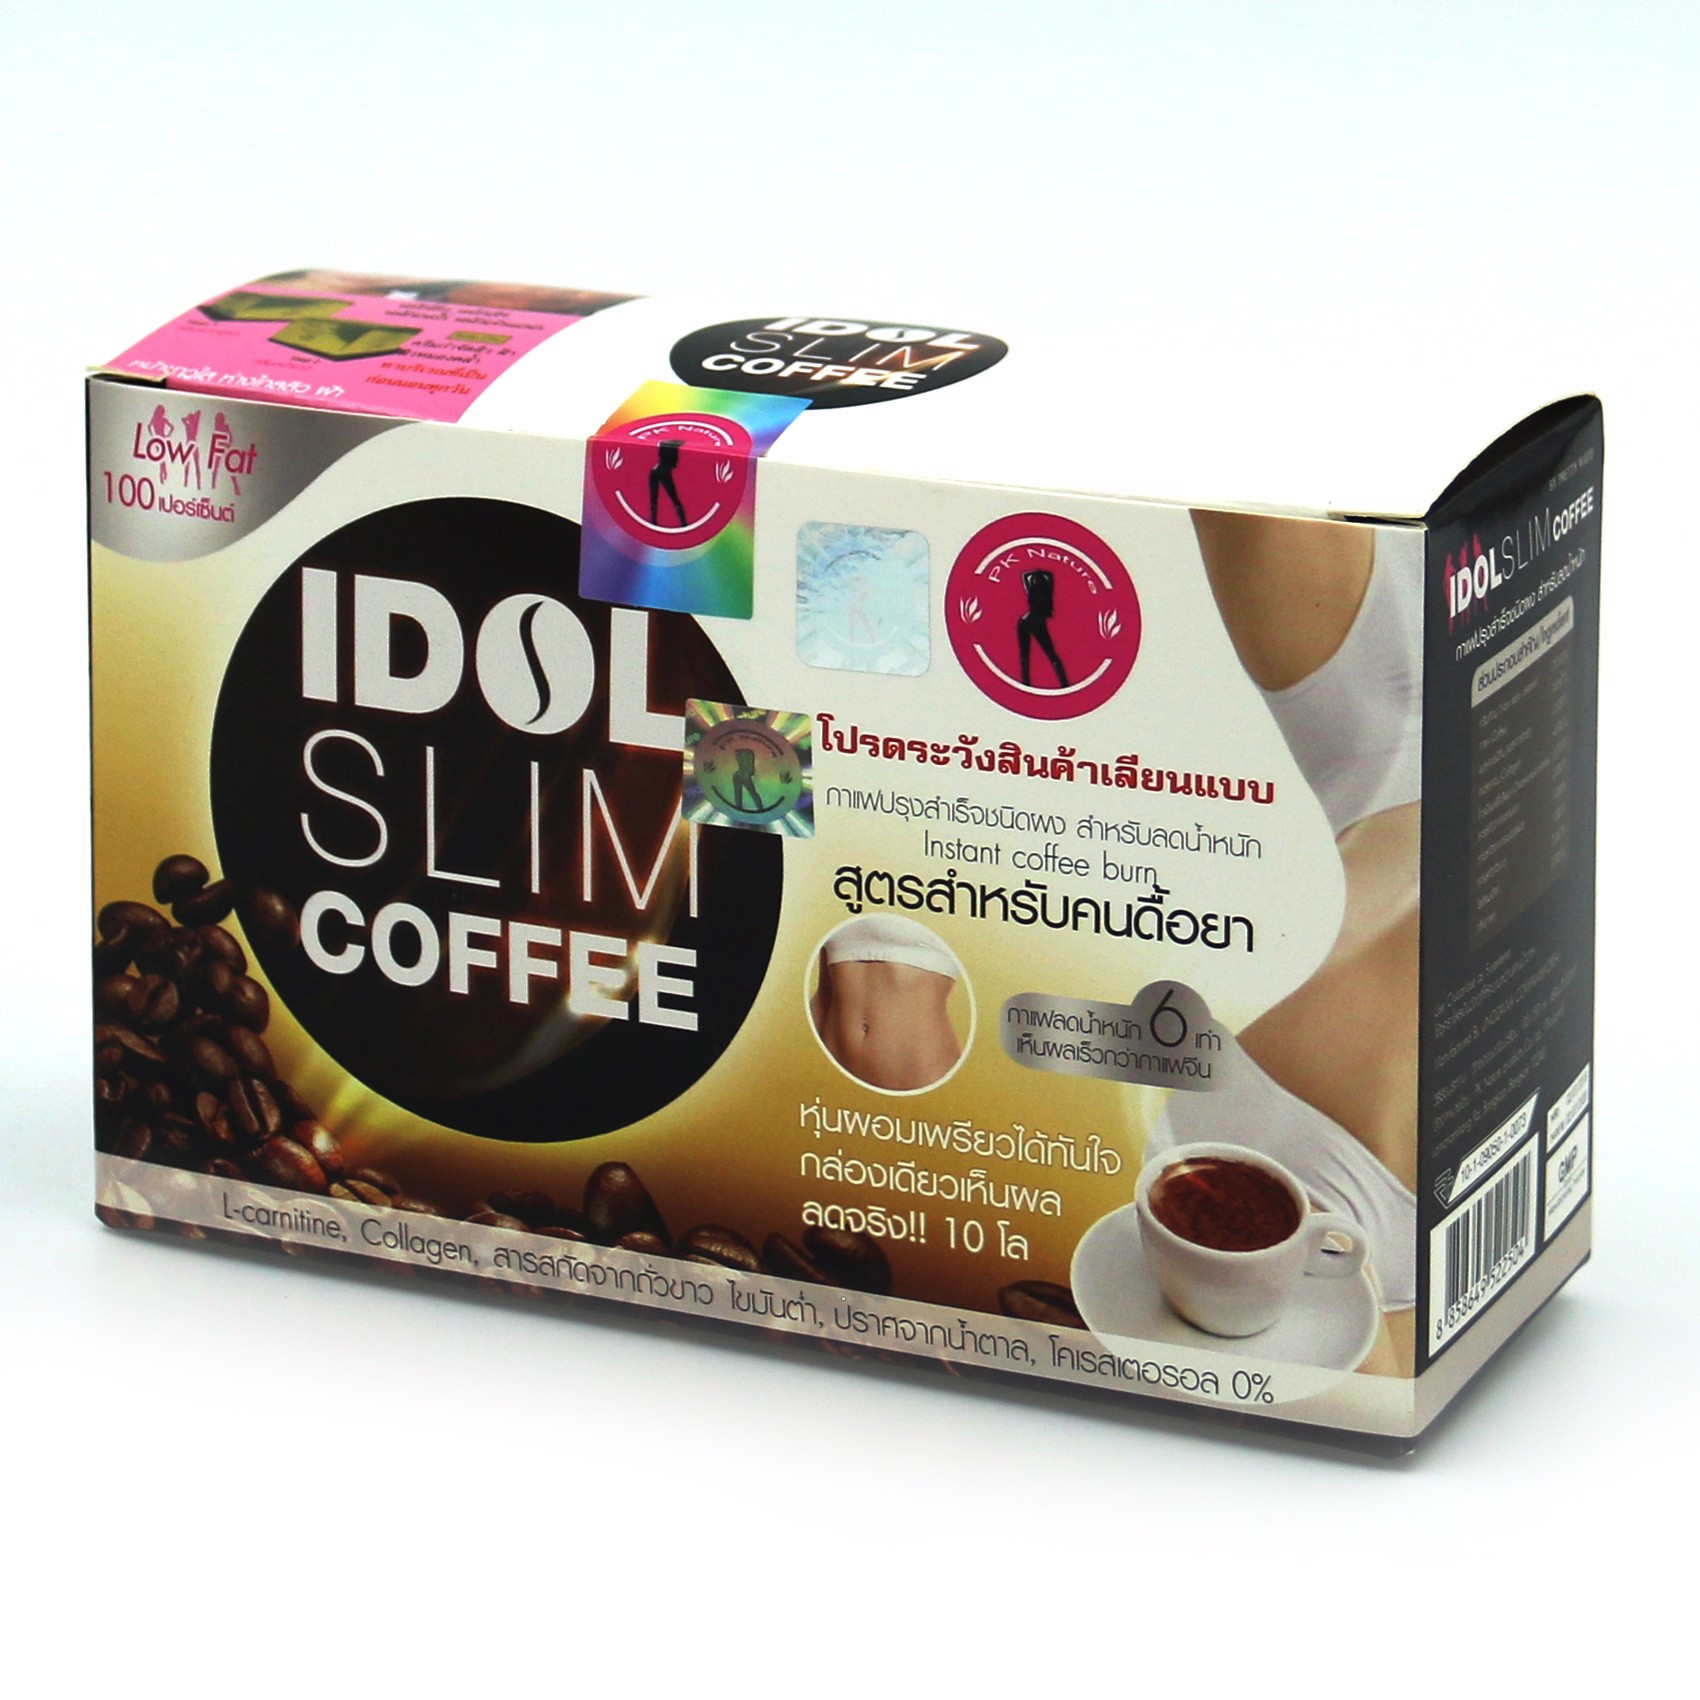 Hcmcafe giảm cân idol slim coffee - hộp15g x 10 gói - ảnh sản phẩm 10